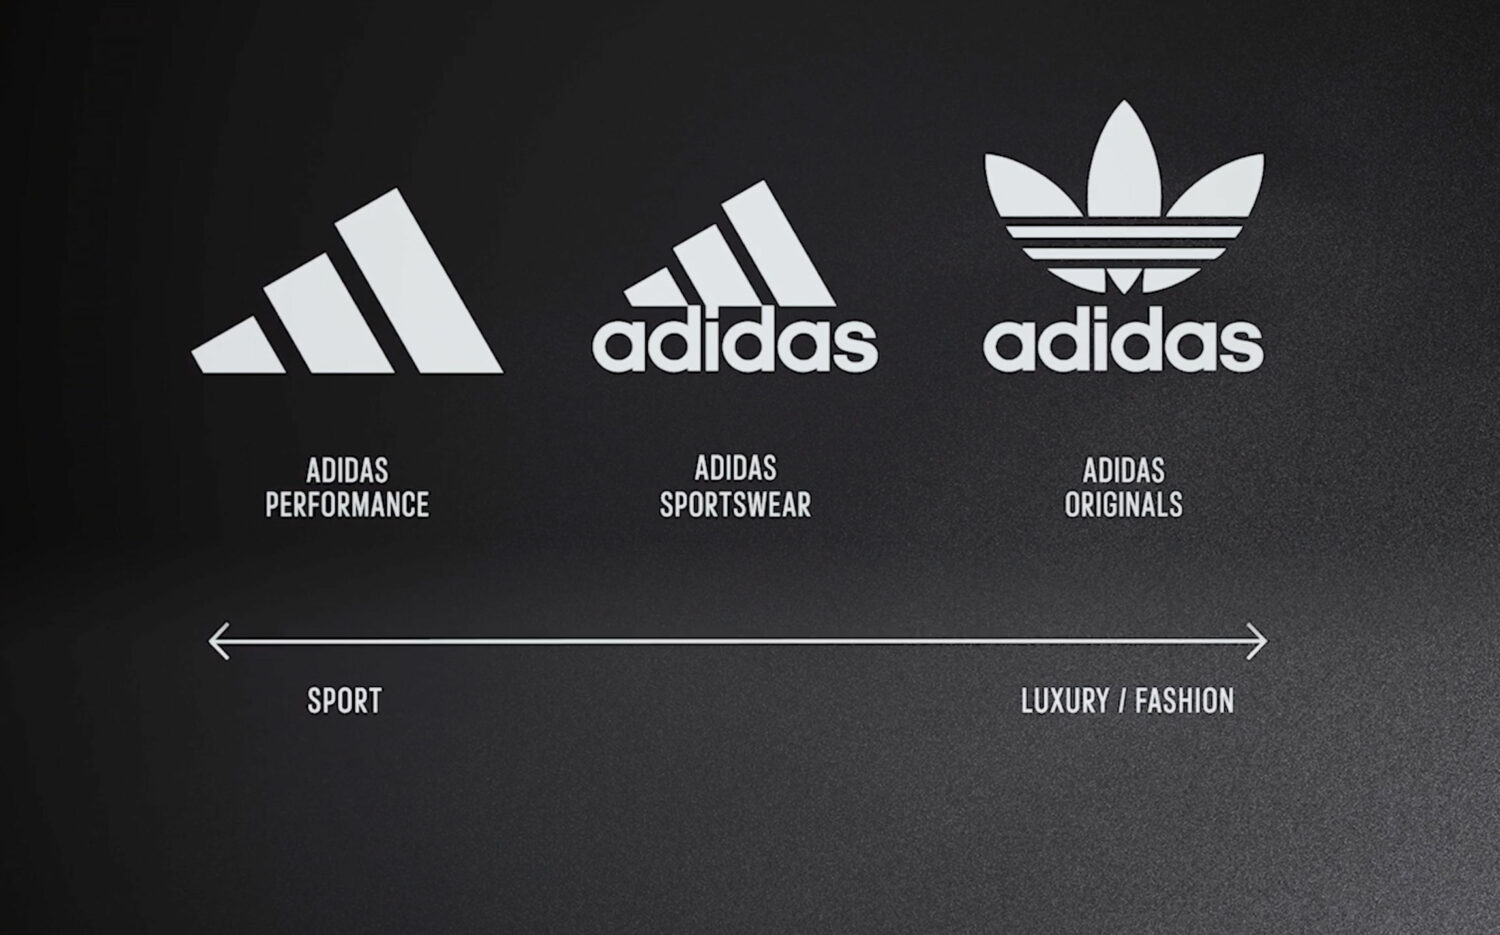 Adidas Brand Position, Quelle: Adidas